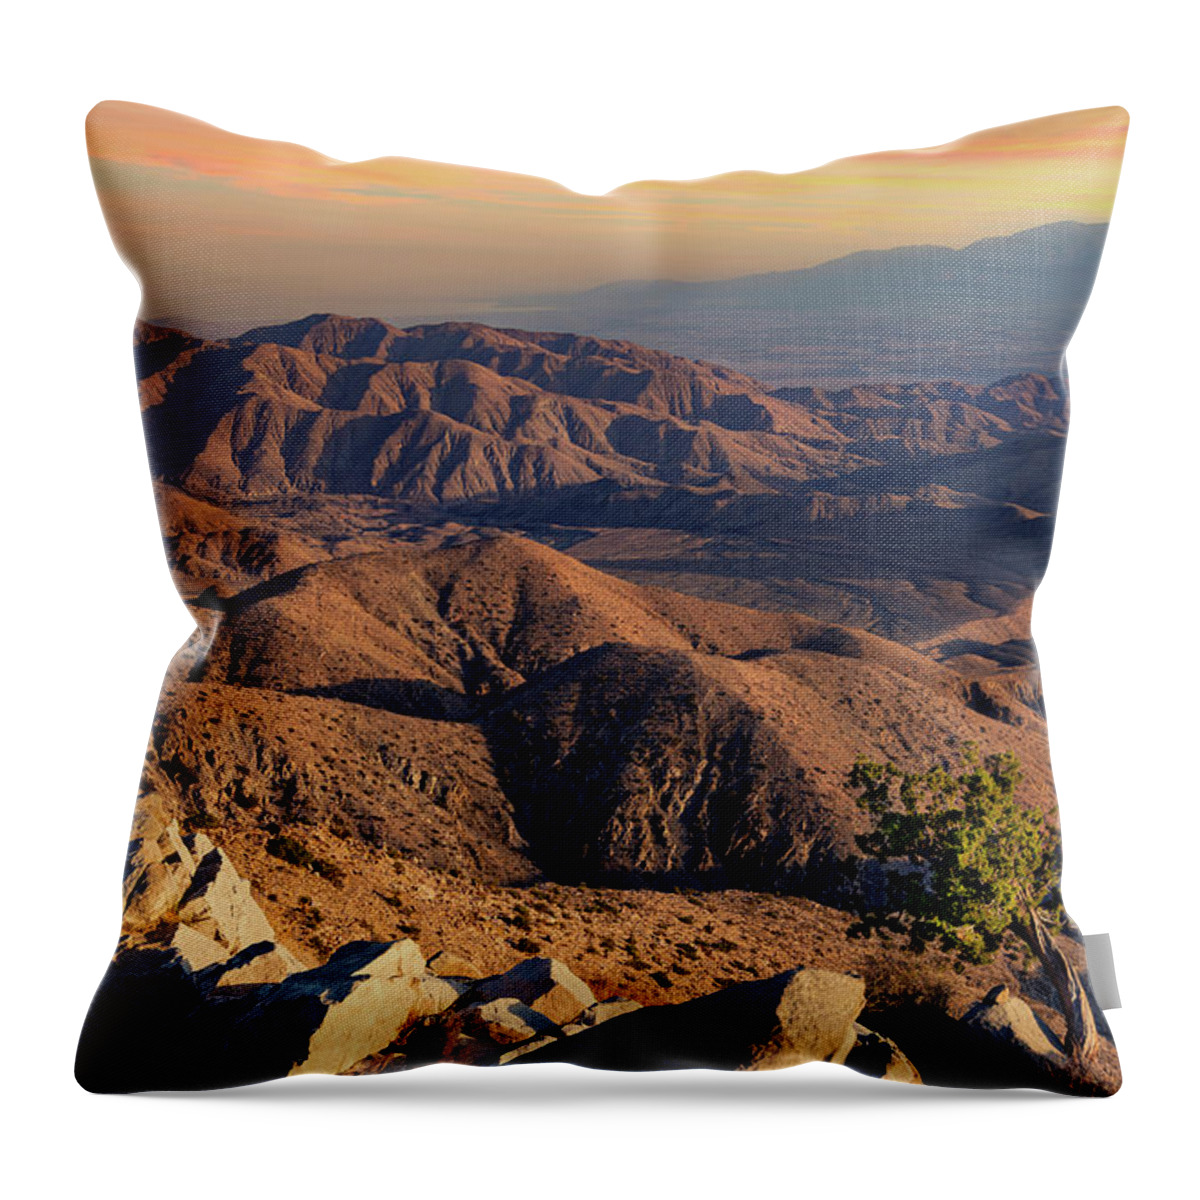 Sunset Throw Pillow featuring the photograph California Mountain Sunset by Anna Marten Miro